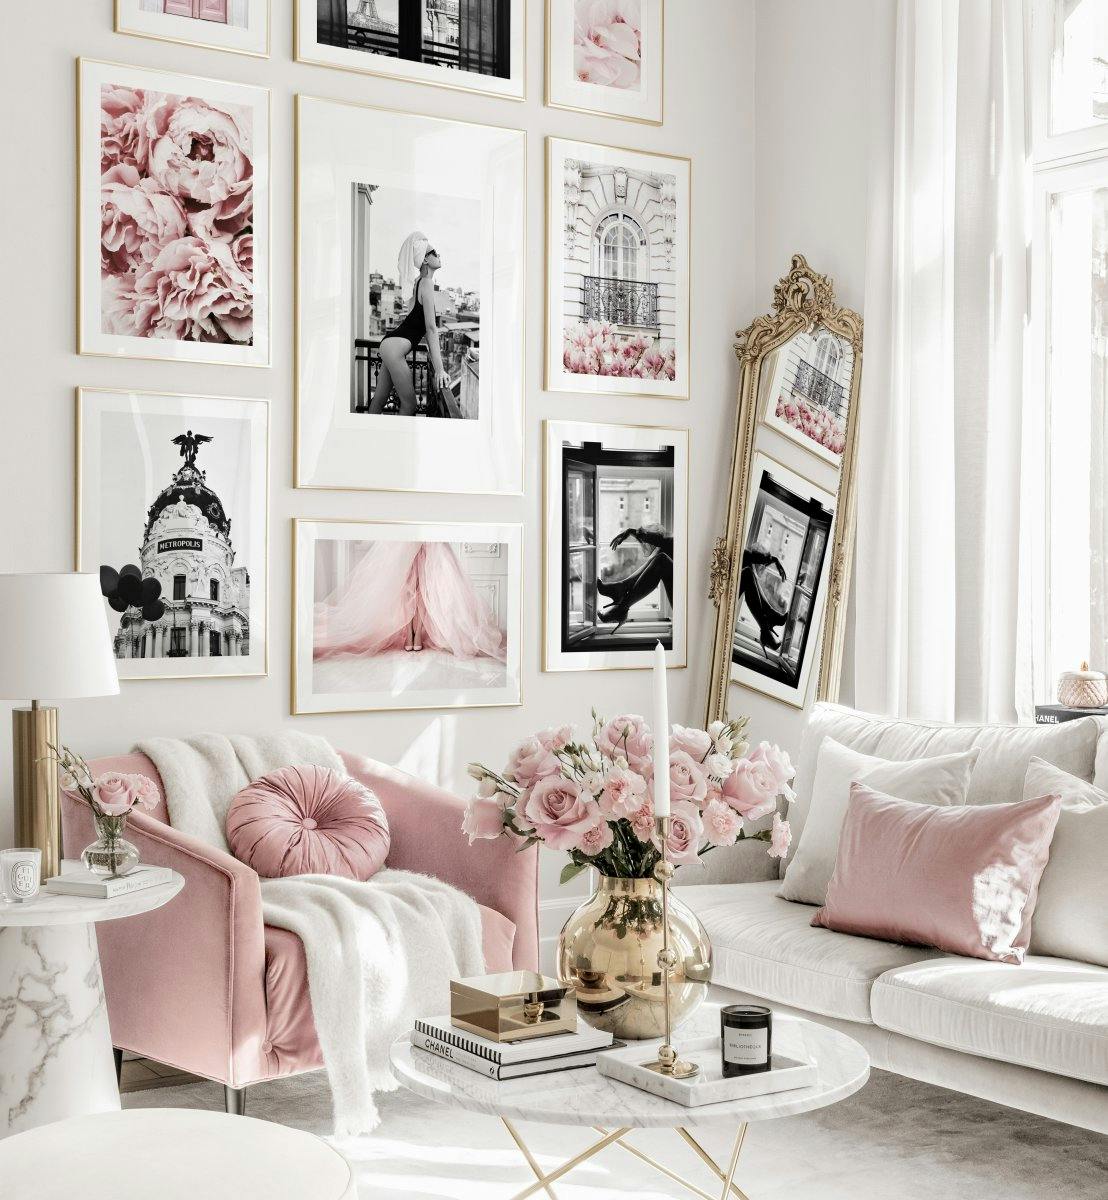 Mural de cuadros rosado pósters de moda pósters de flores marcos dorados